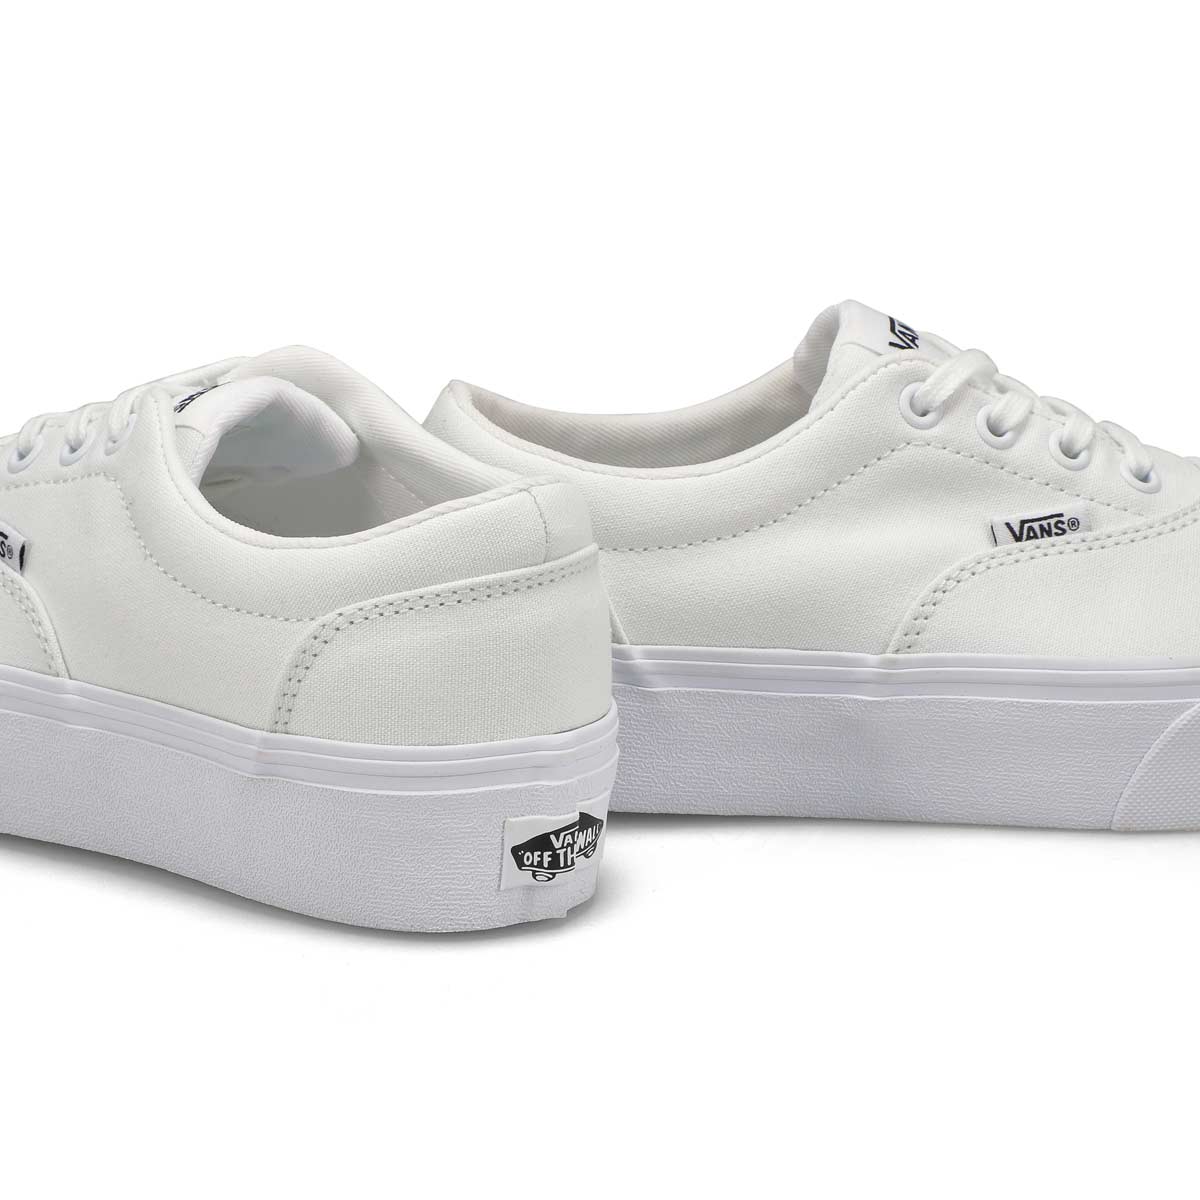 Women's Doheny Platform Lace Up Sneaker - White/White